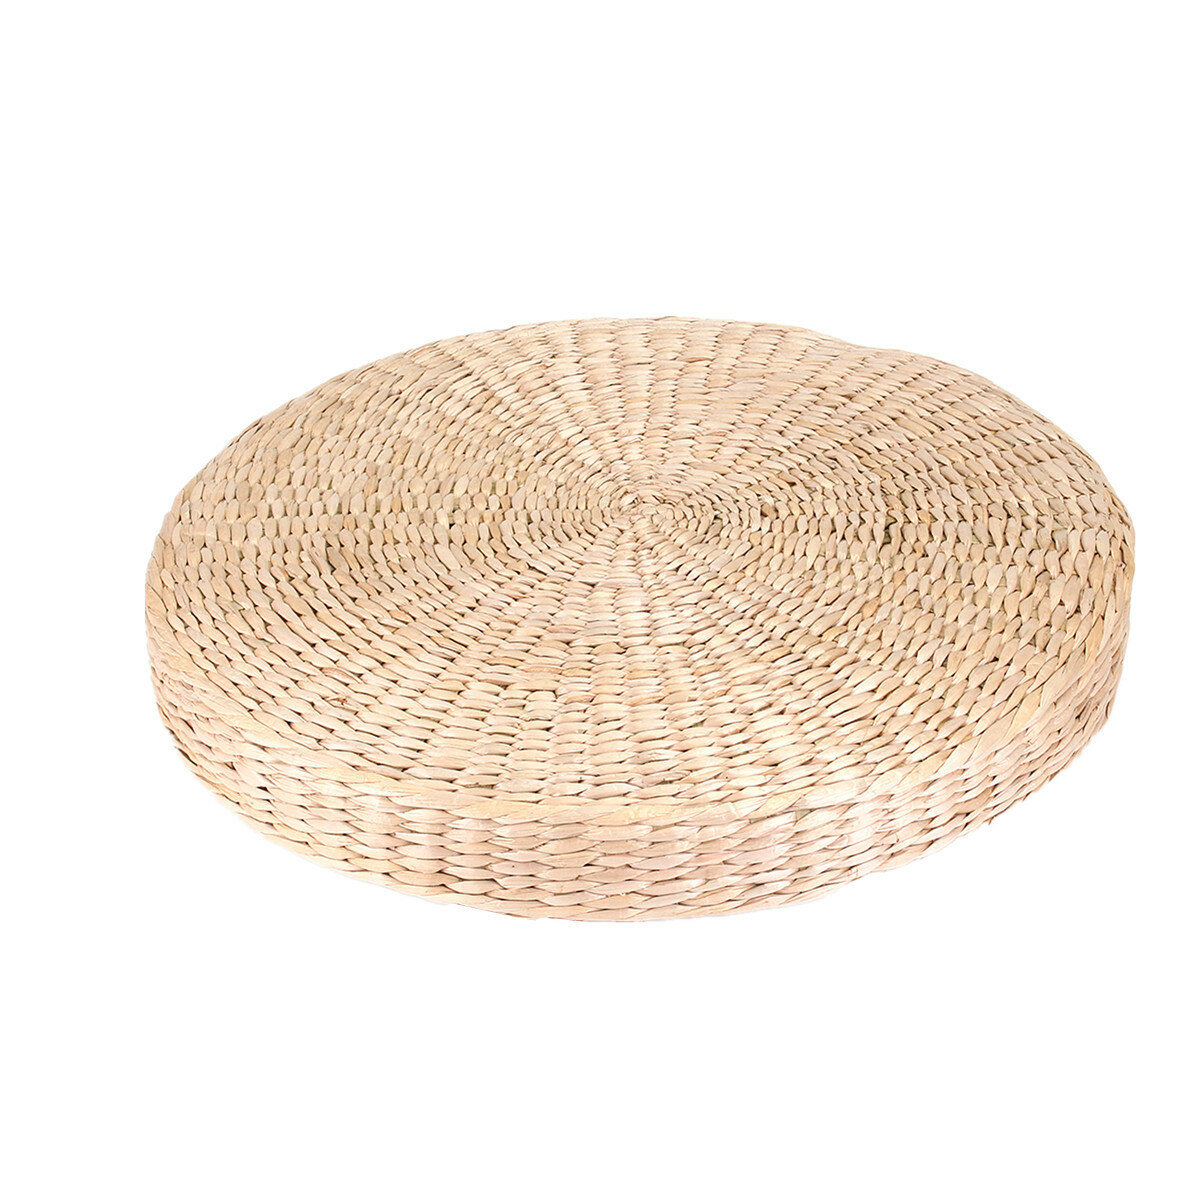 50 x 6cm Thick Round Pouf Tatami Natural Straw Meditation Mat Cushion Floor Yoga Wicker Mat